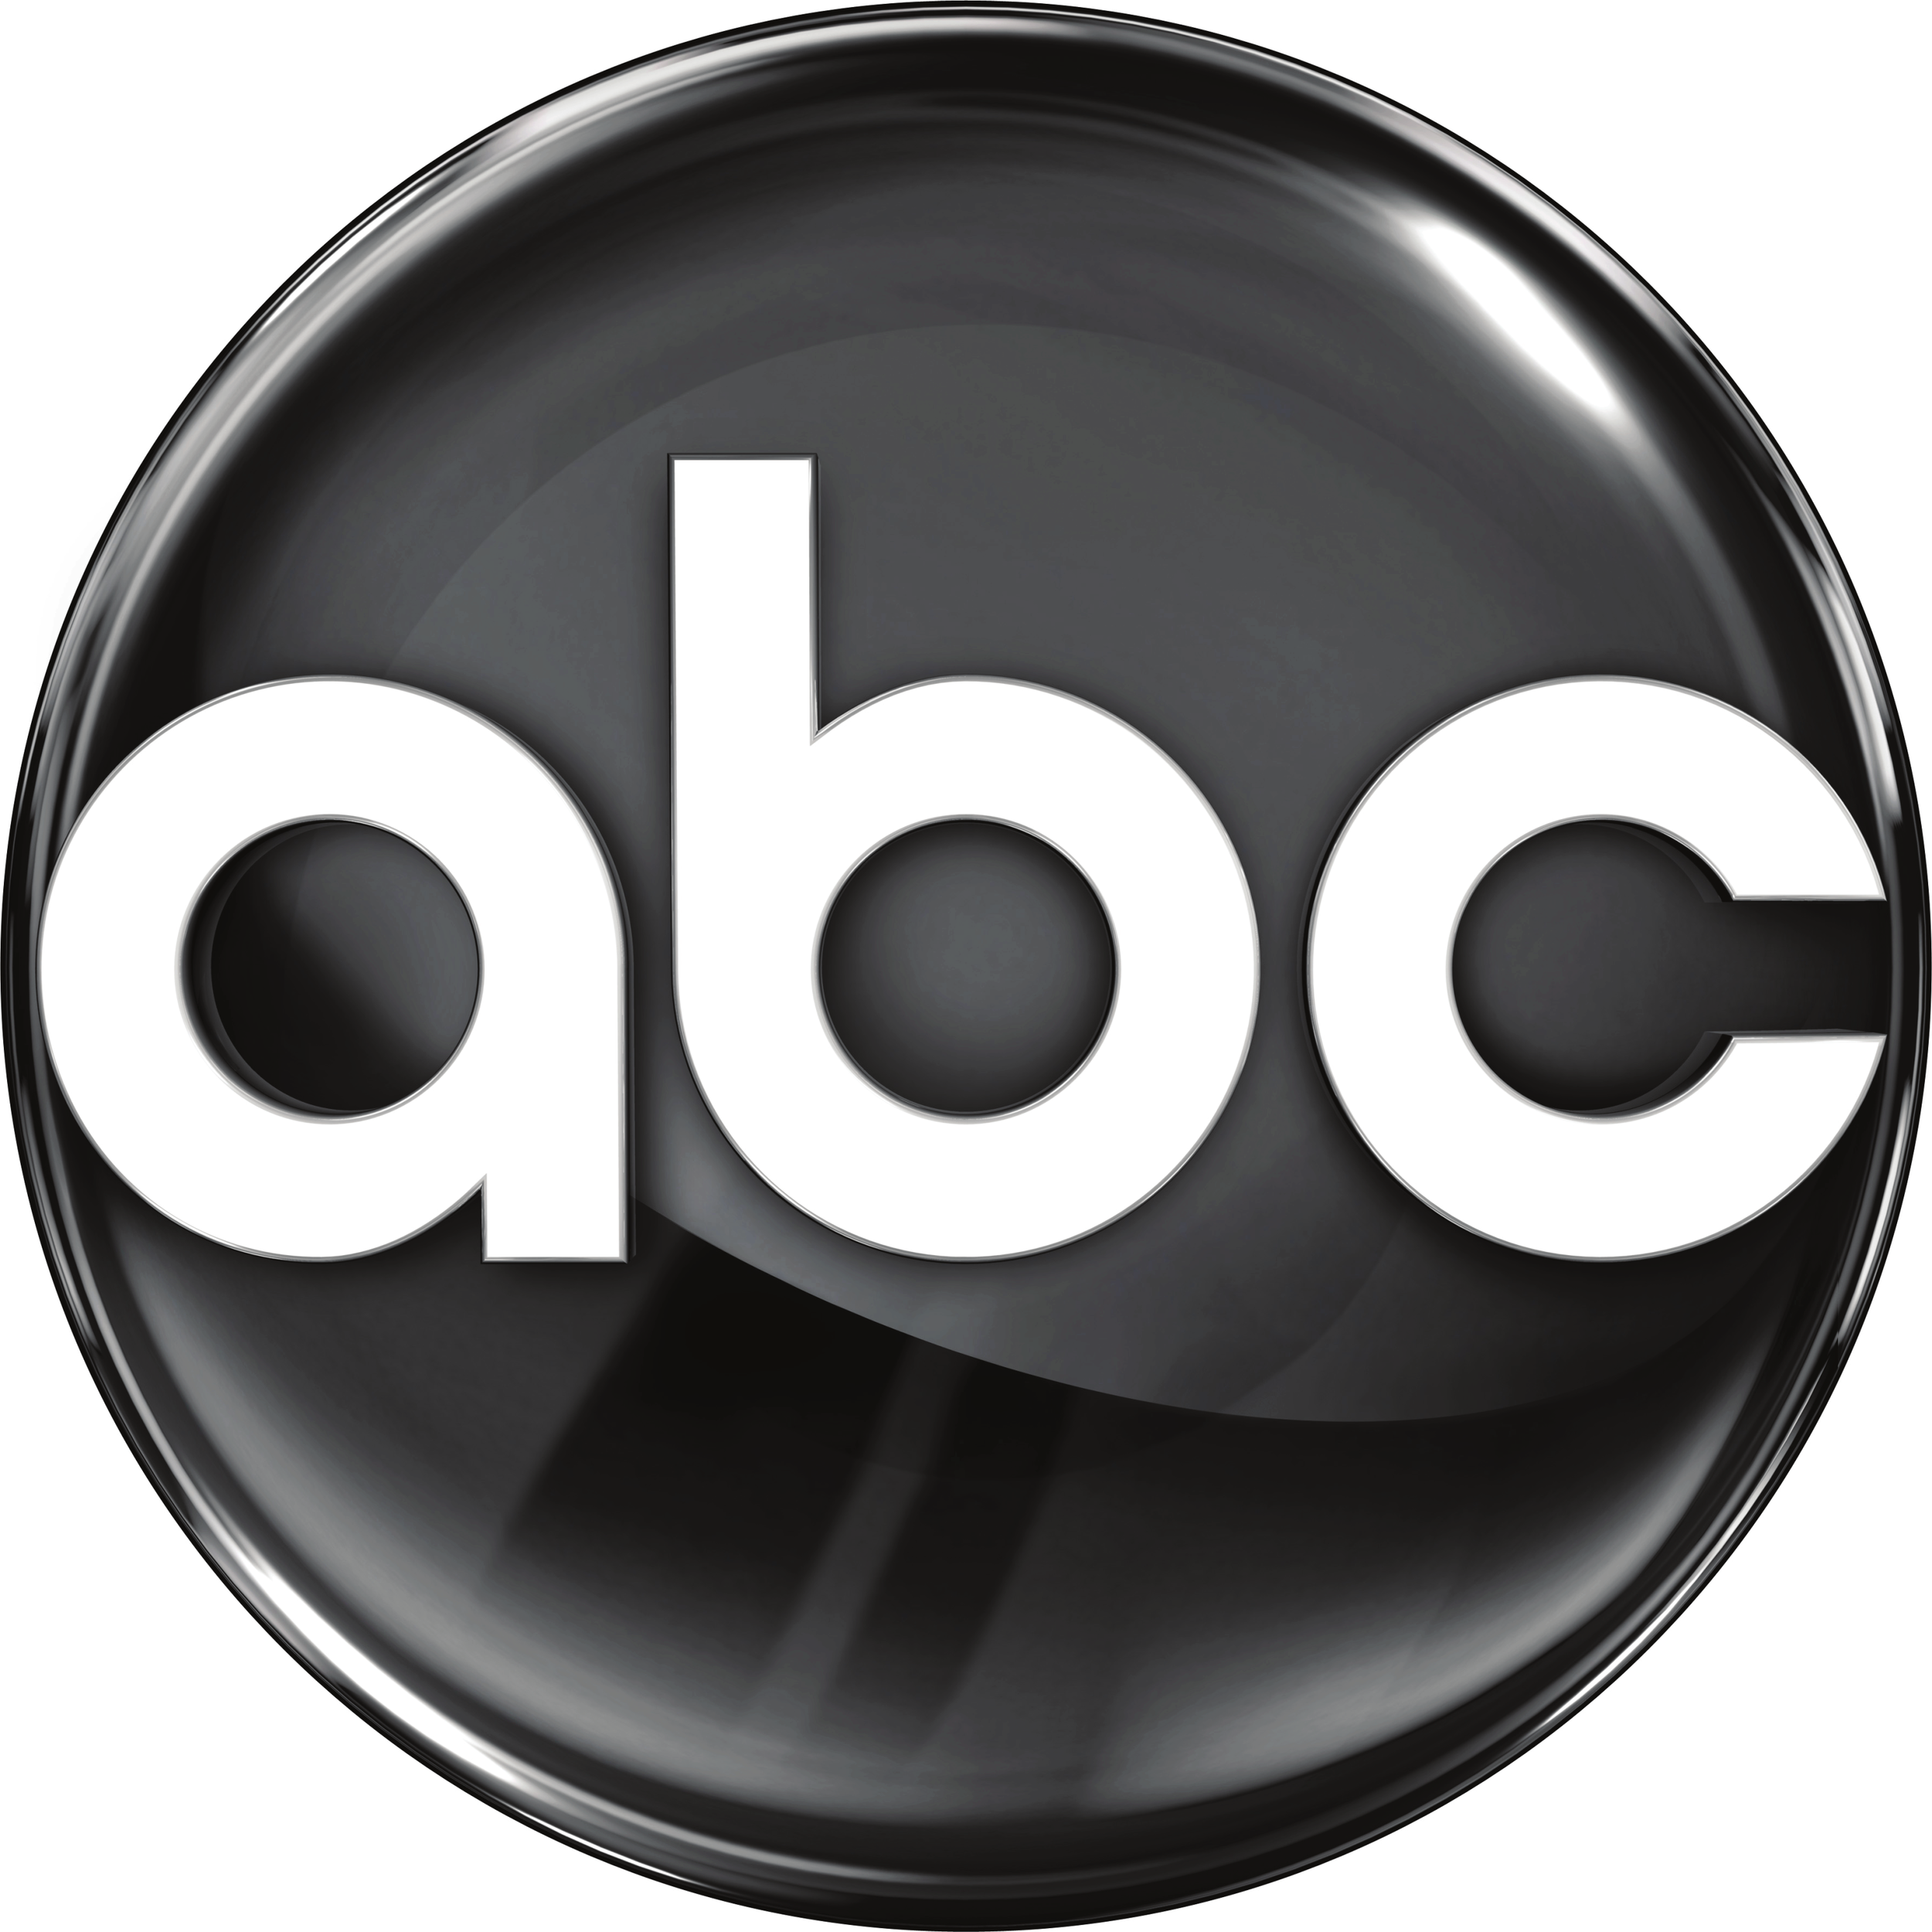 ABC_logo_2007.png